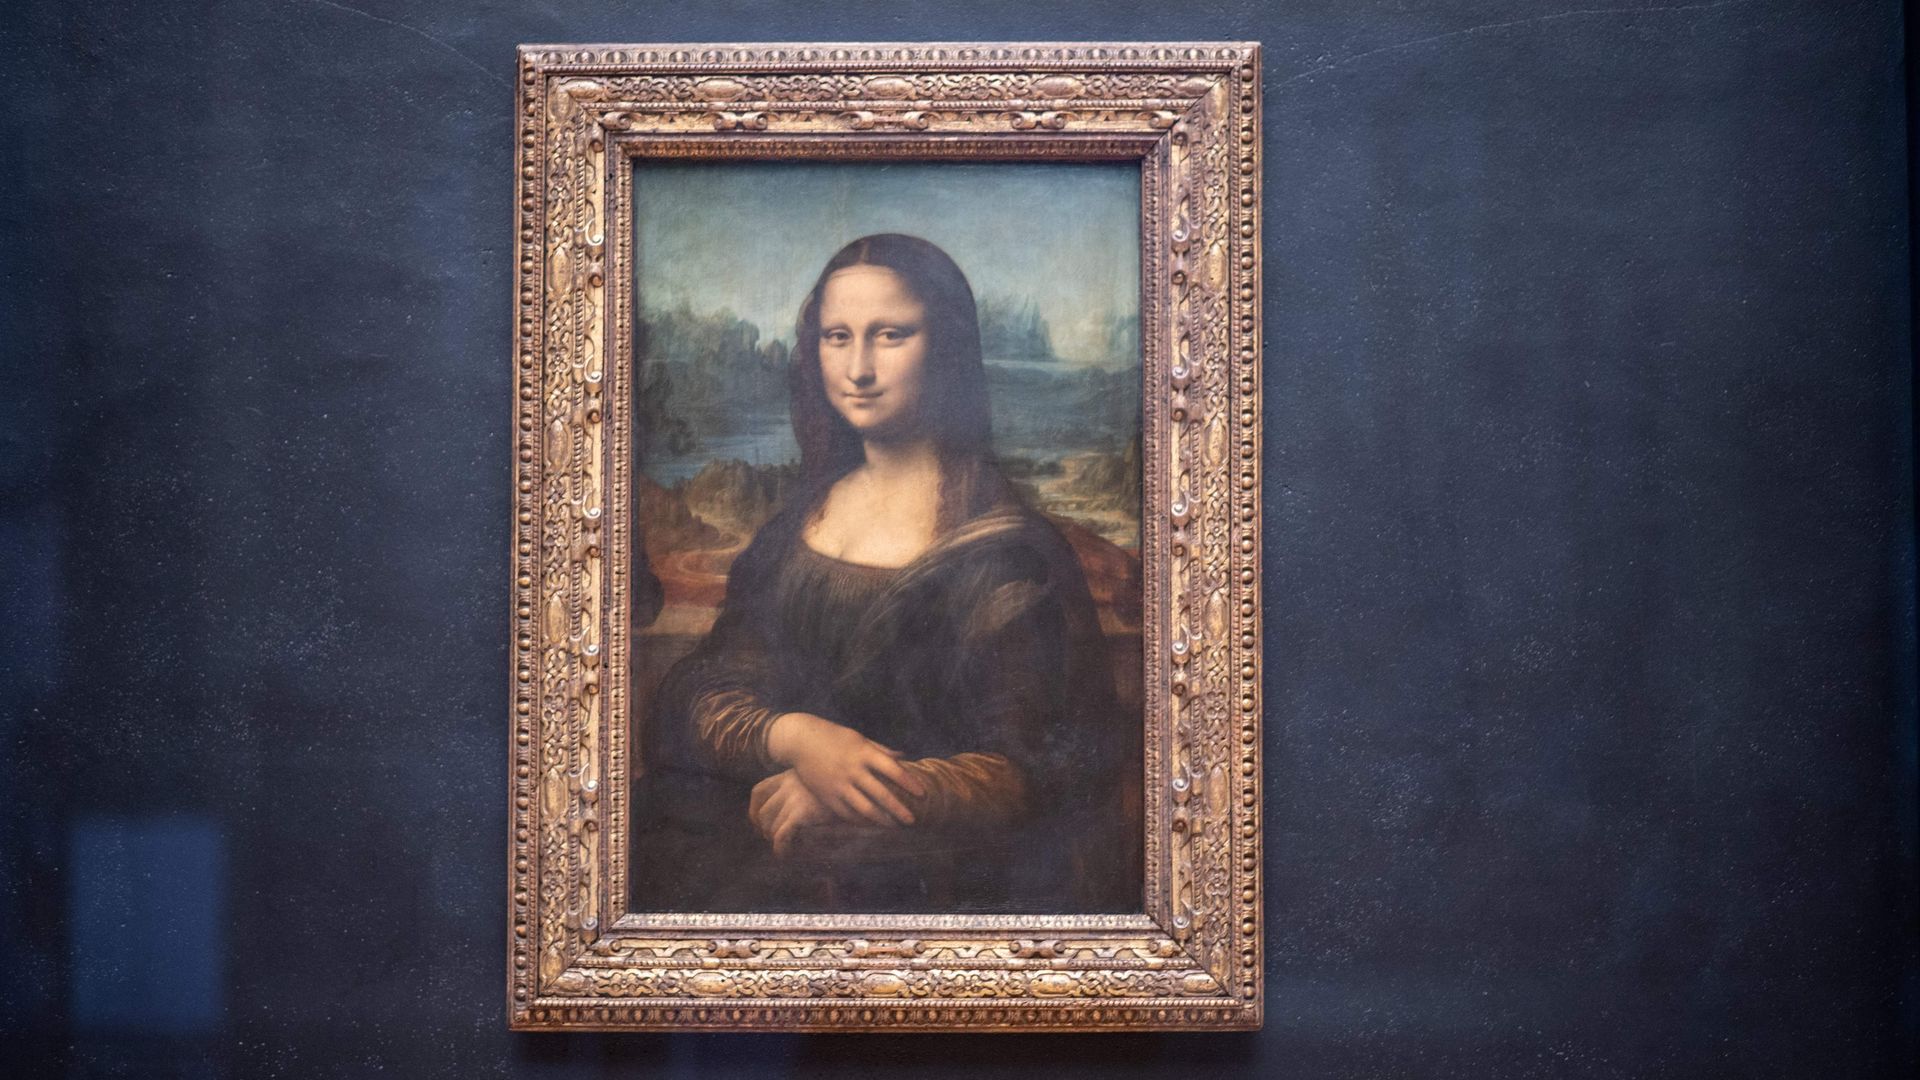 The portrait of Lisa Gherardini, wife of Francesco del Giocondo, known as the Mona Lisa.